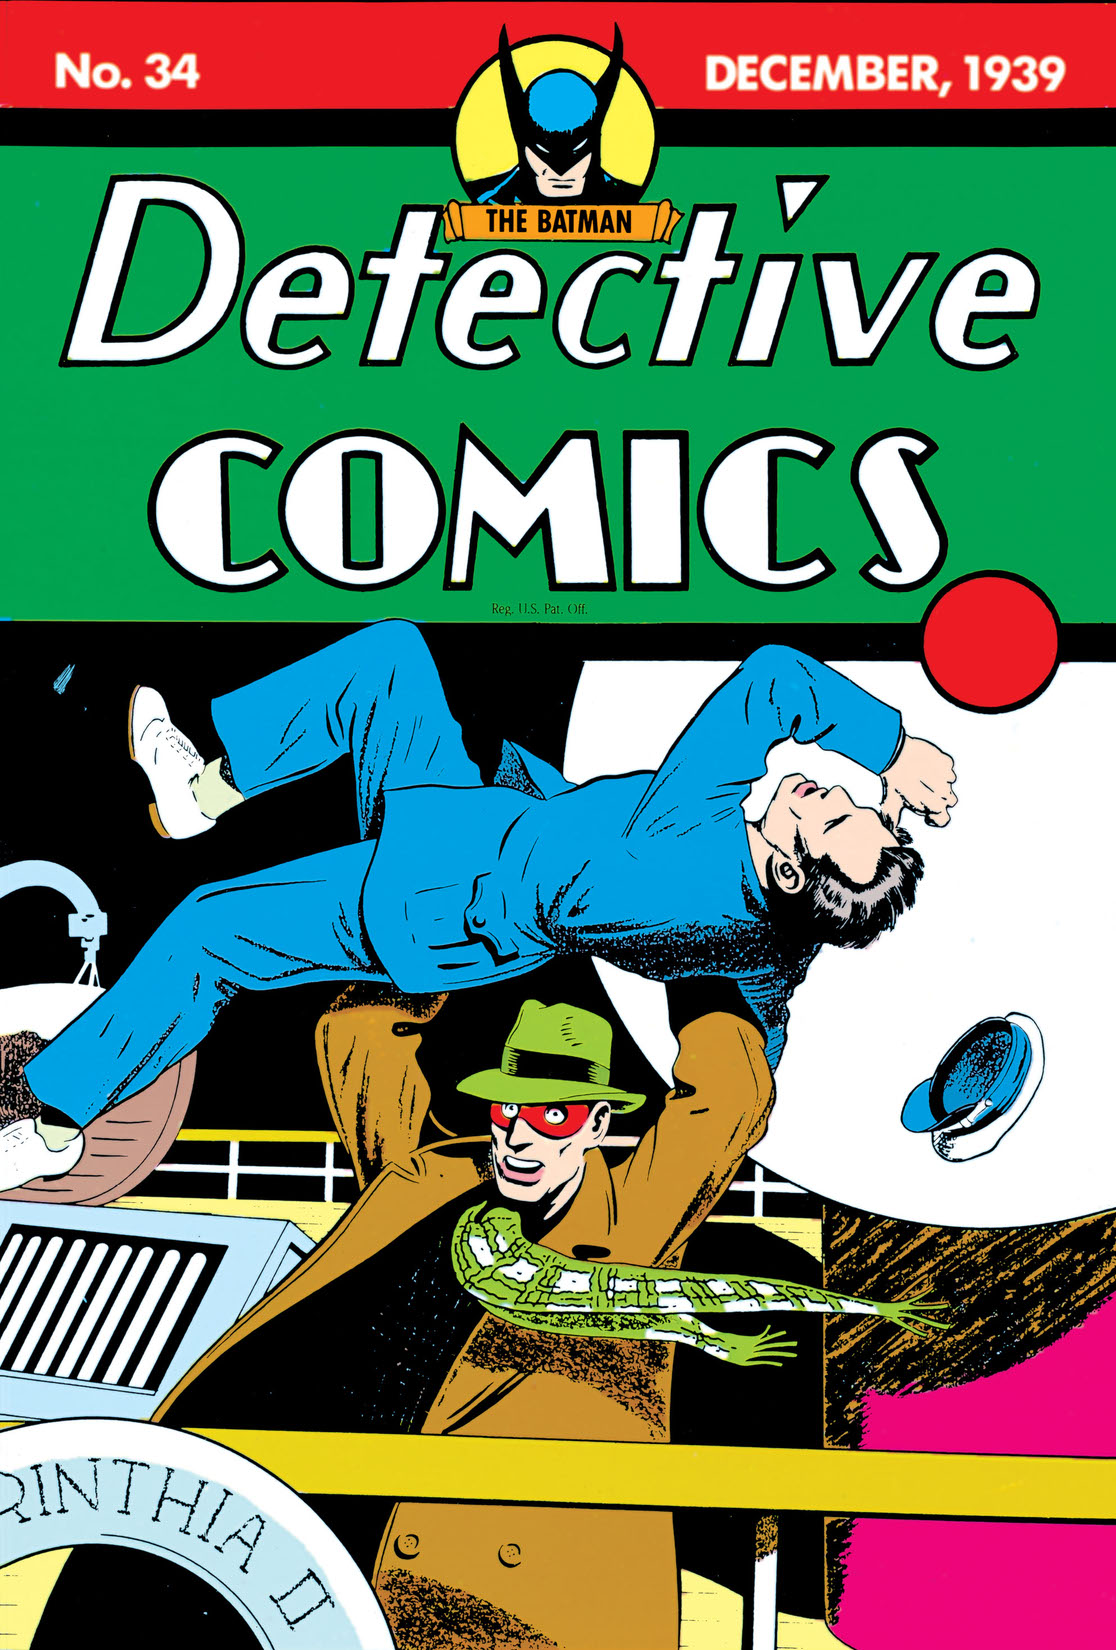 Detective Comics (1937-) #34 preview images